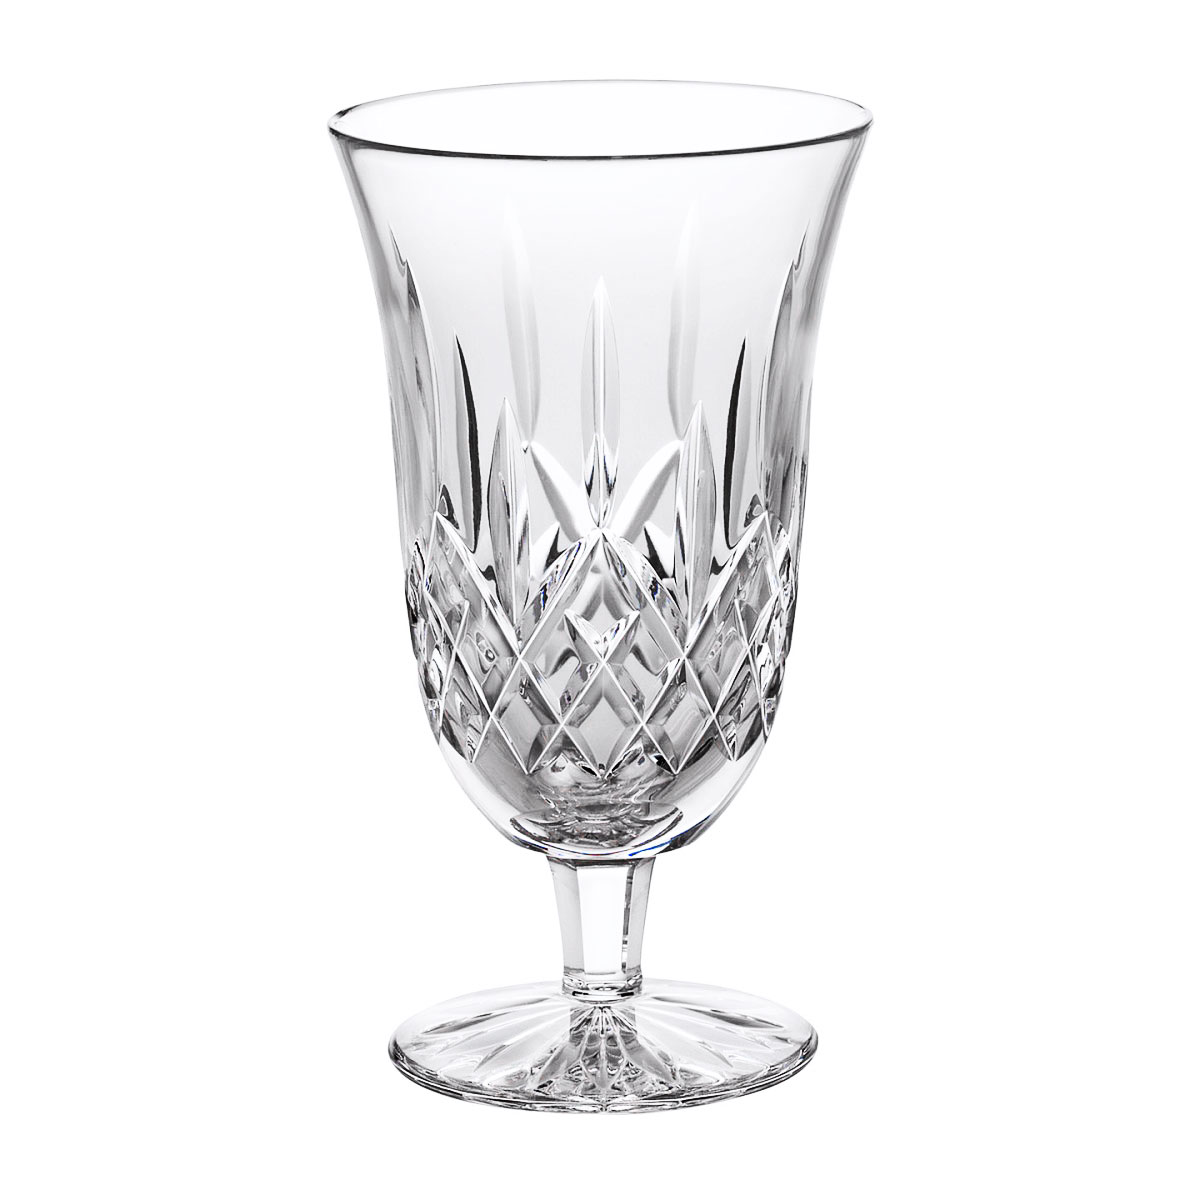 Waterford Crystal, Lismore Footed Crystal Iced Beverage, Single